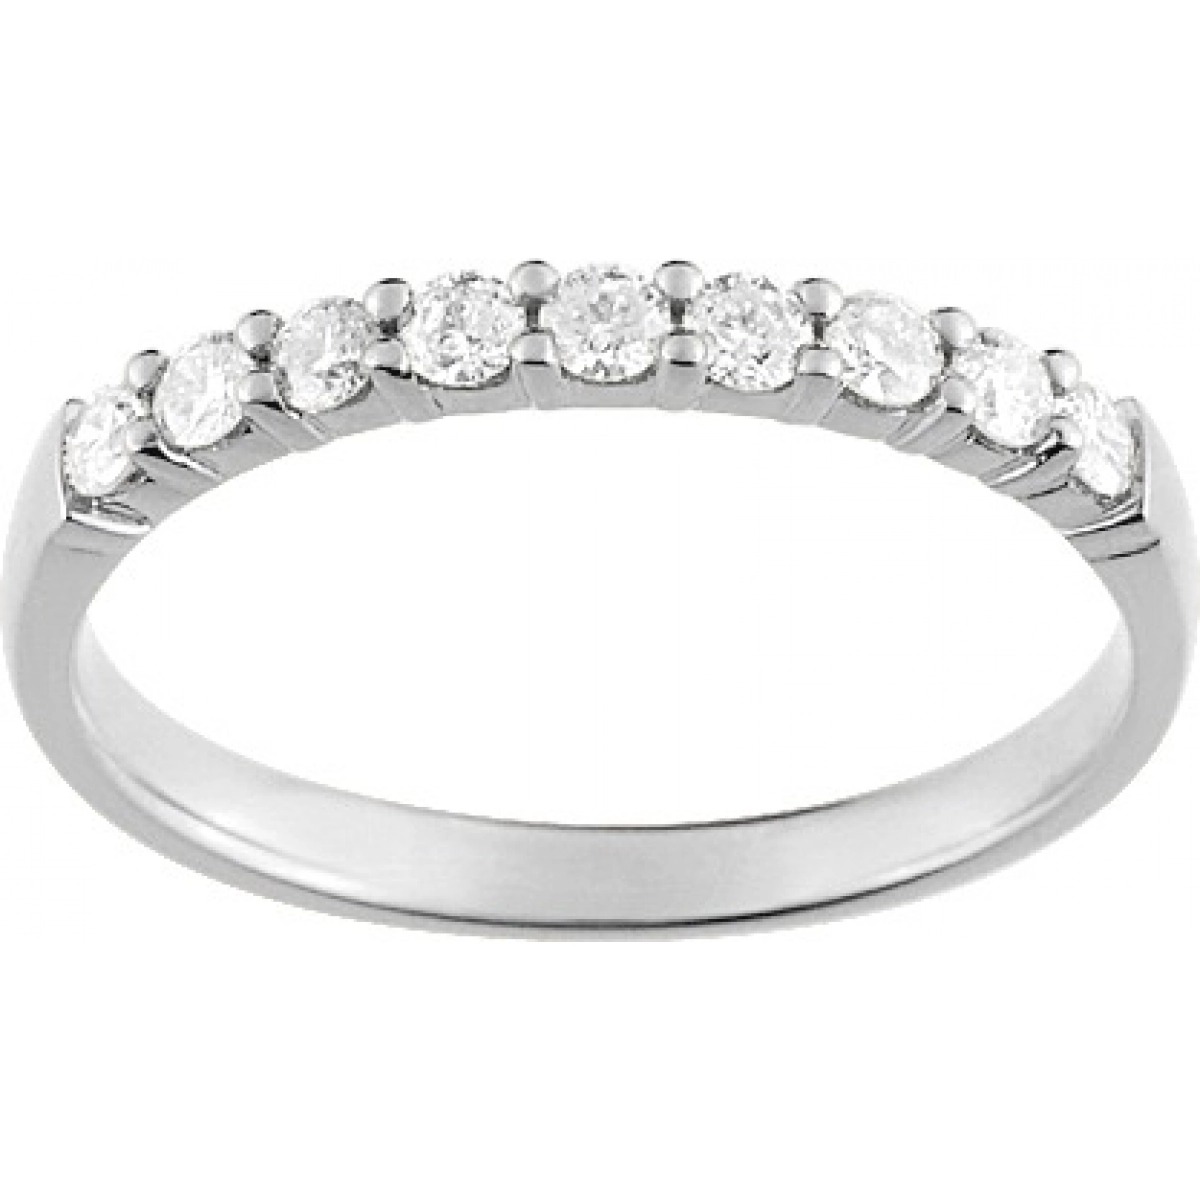 Wedding ring w. 9 diam 0.30ct GHSI 18K WG - Size: 50  Lua Blanca  3L006GB2.10